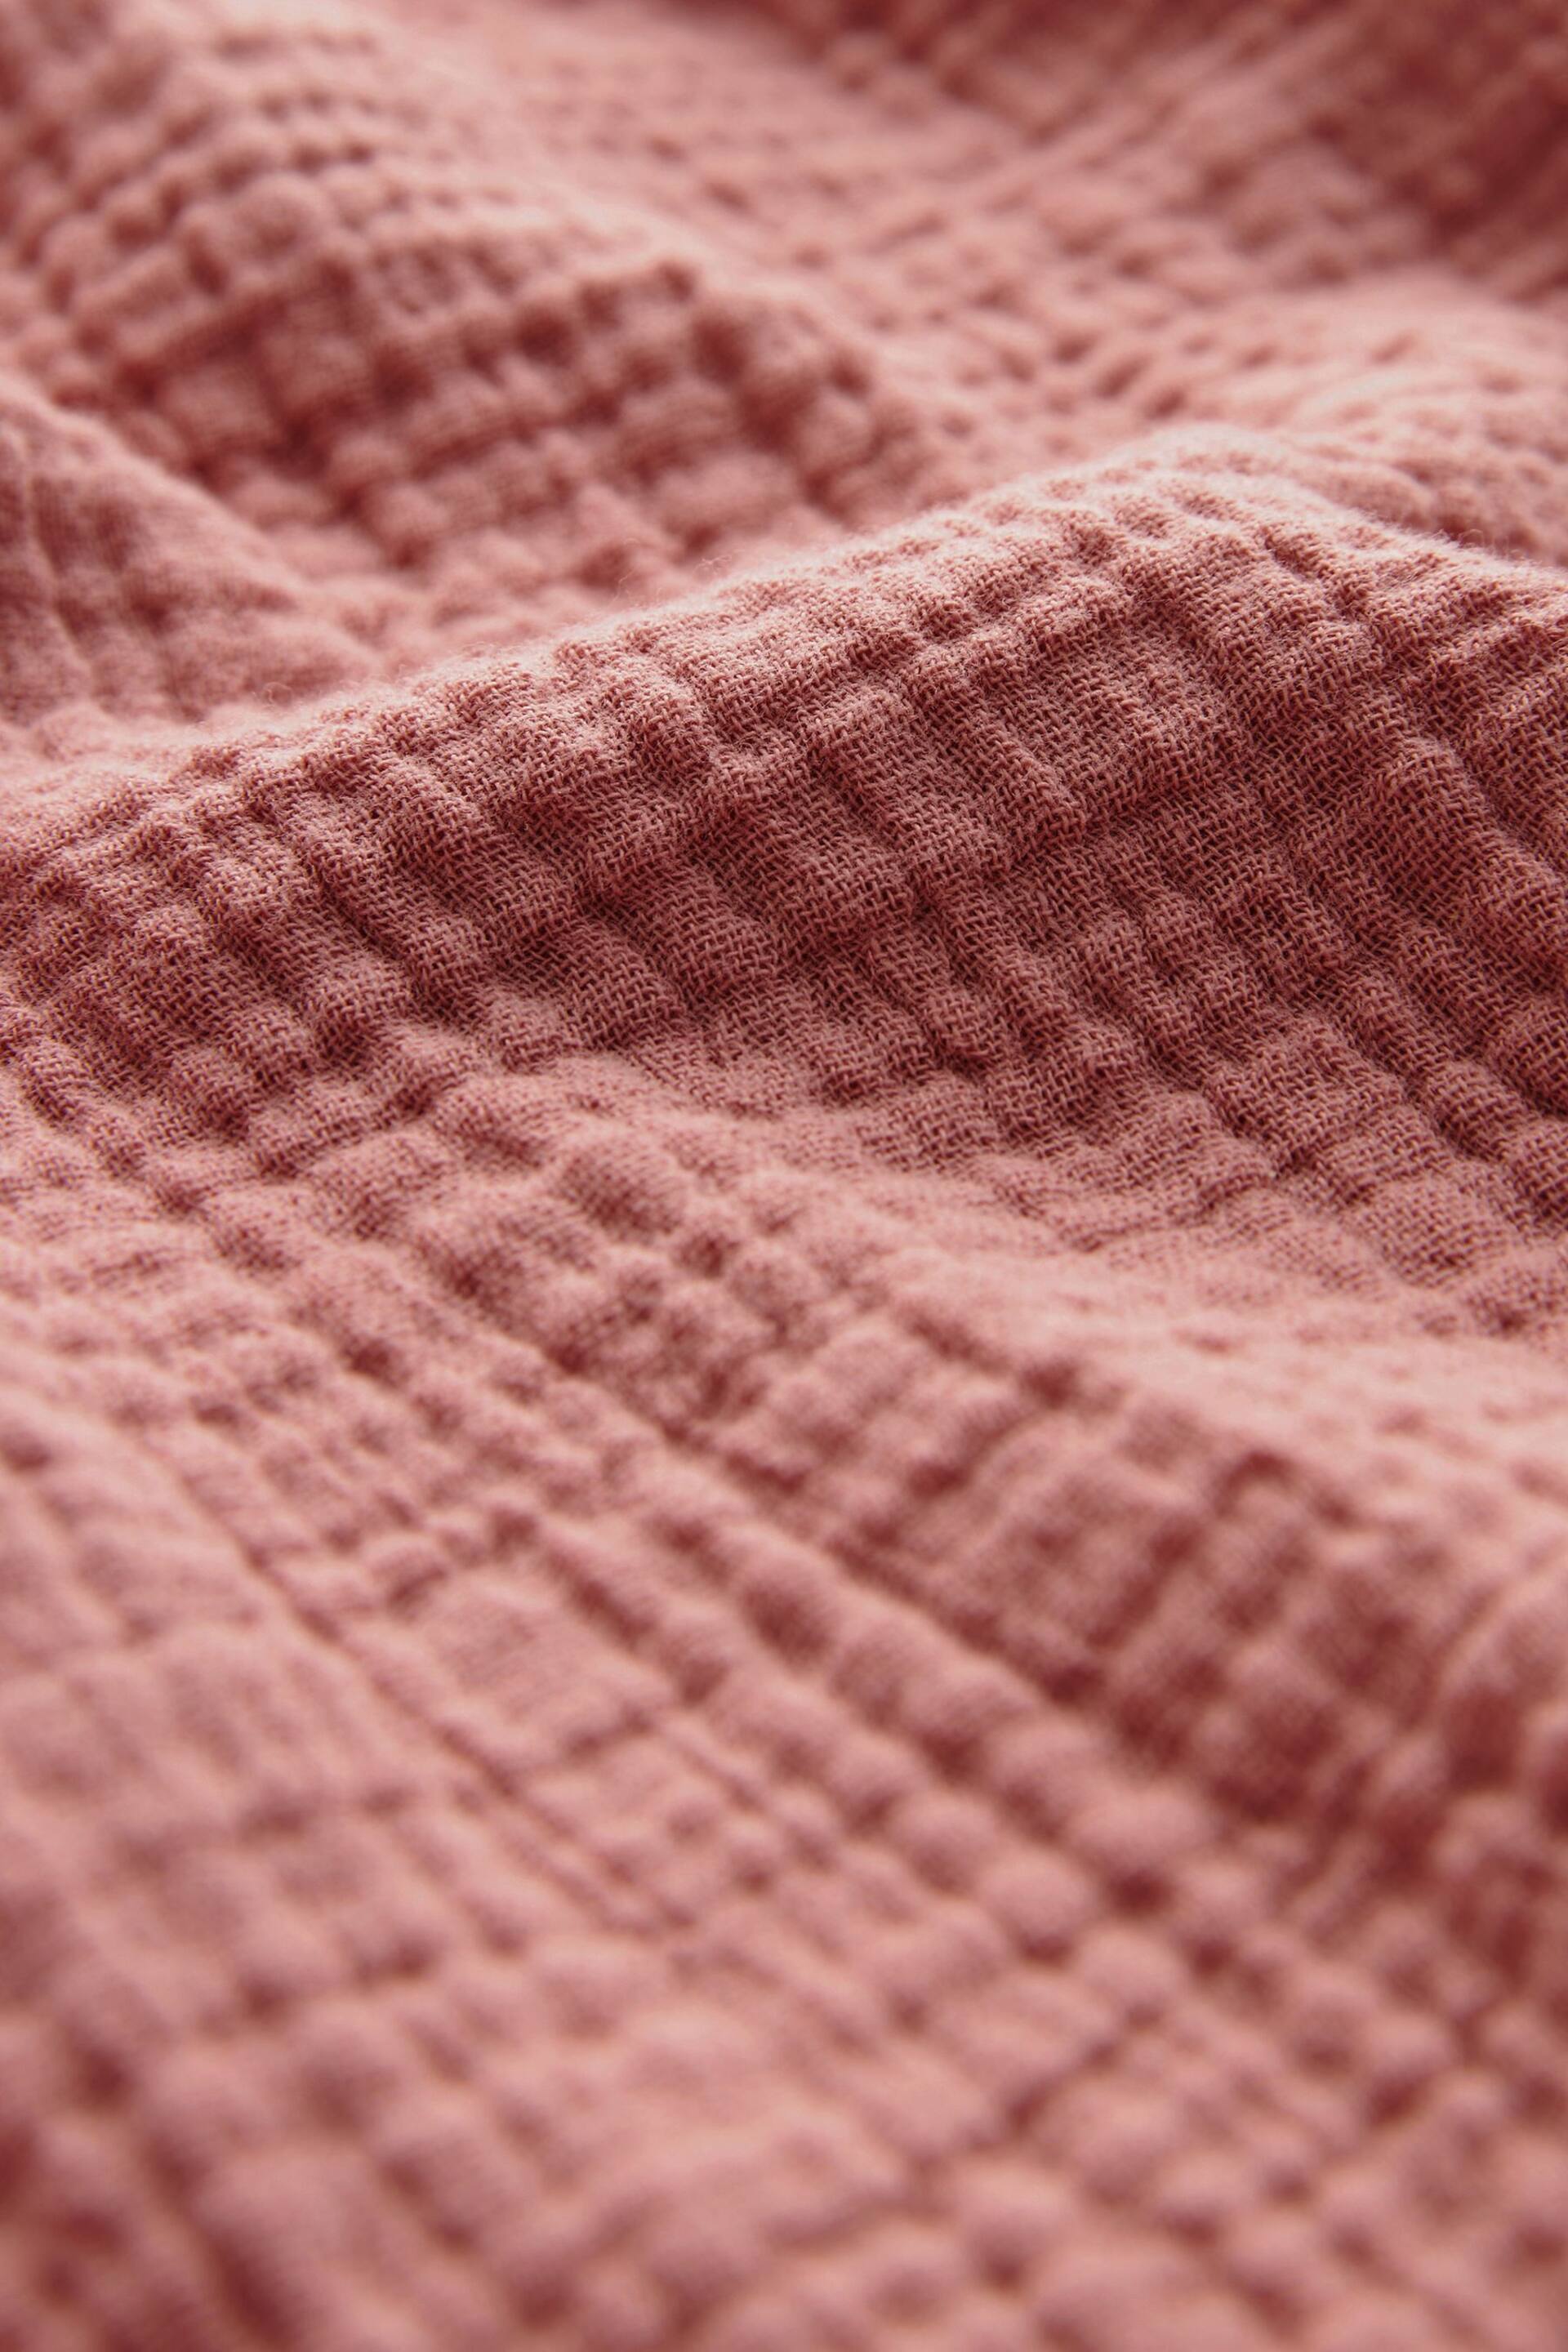 Pink Crinkle Playsuit - Image 7 of 7